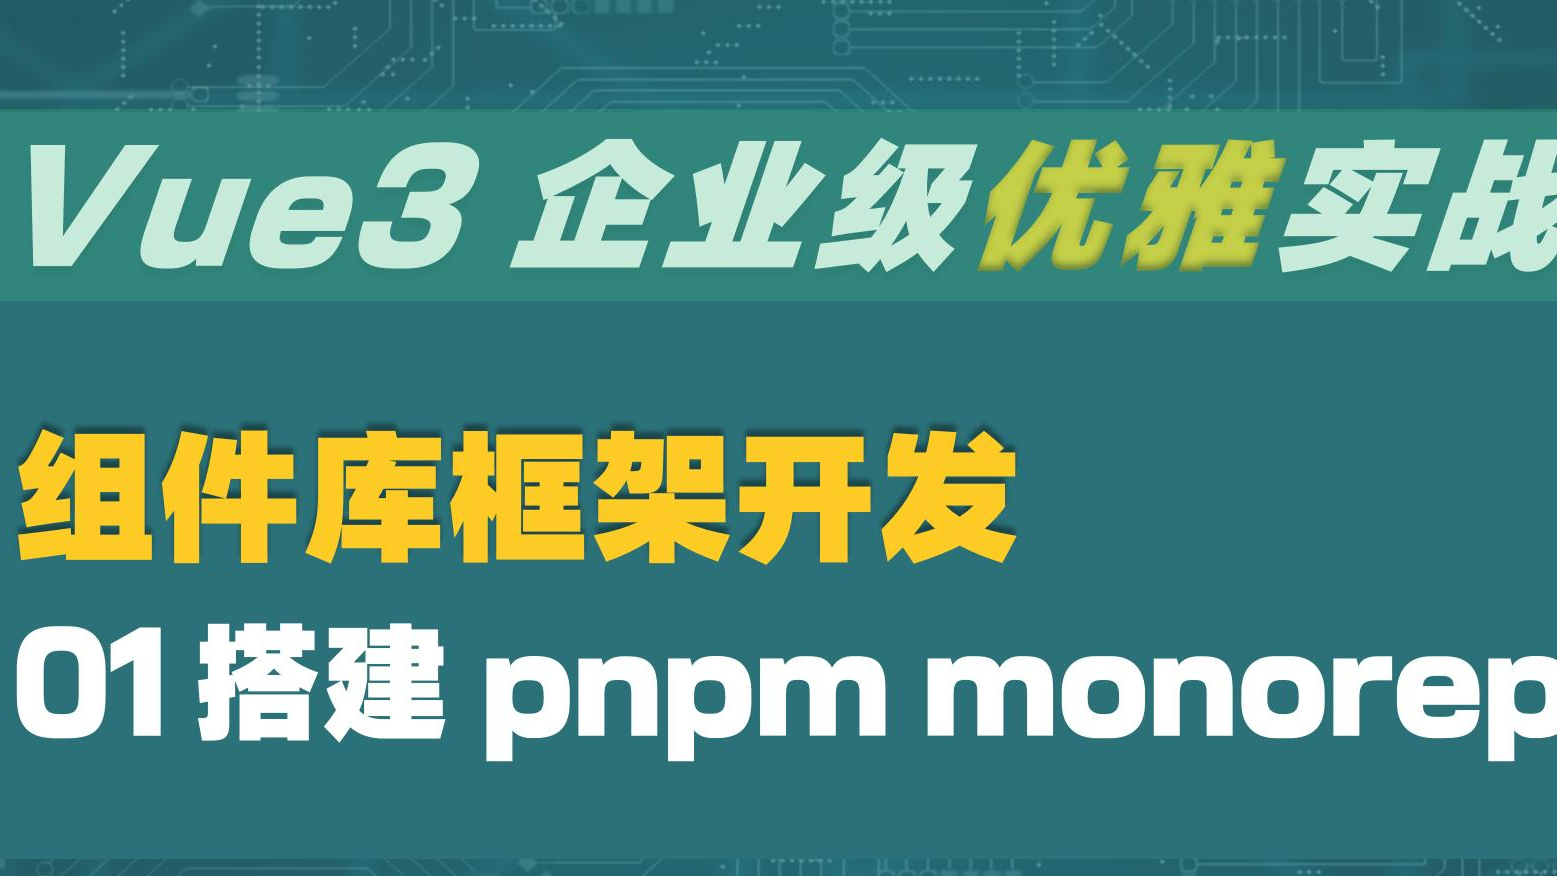 Vue3 企业级优雅实战 - 组件库框架 - 1 搭建 pnpm monorepo